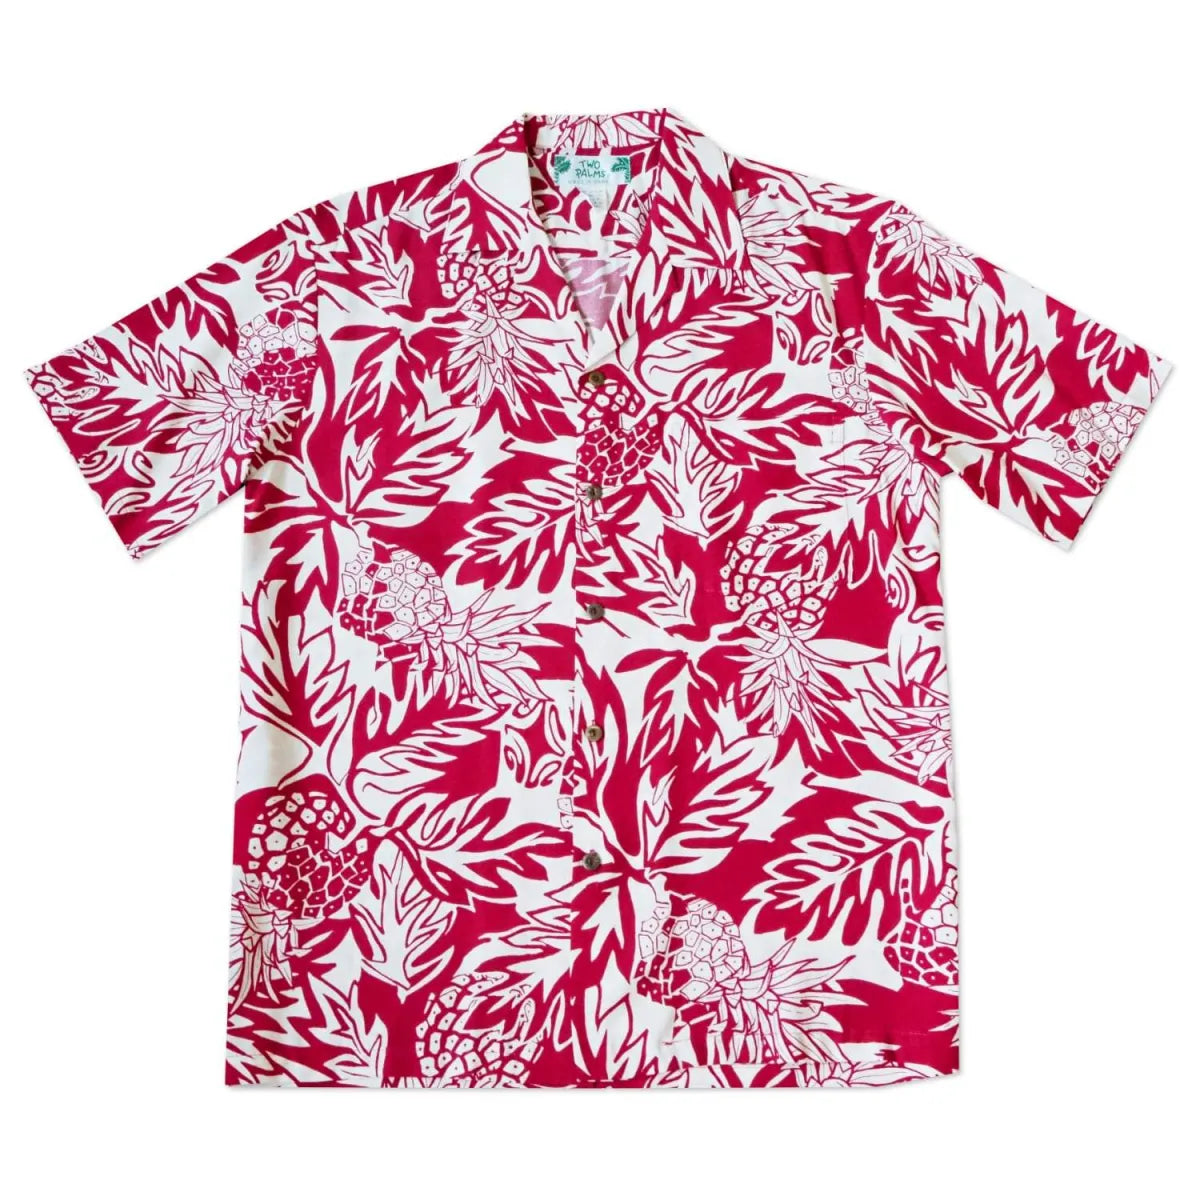 Wild pineapple red hawaiian rayon shirt